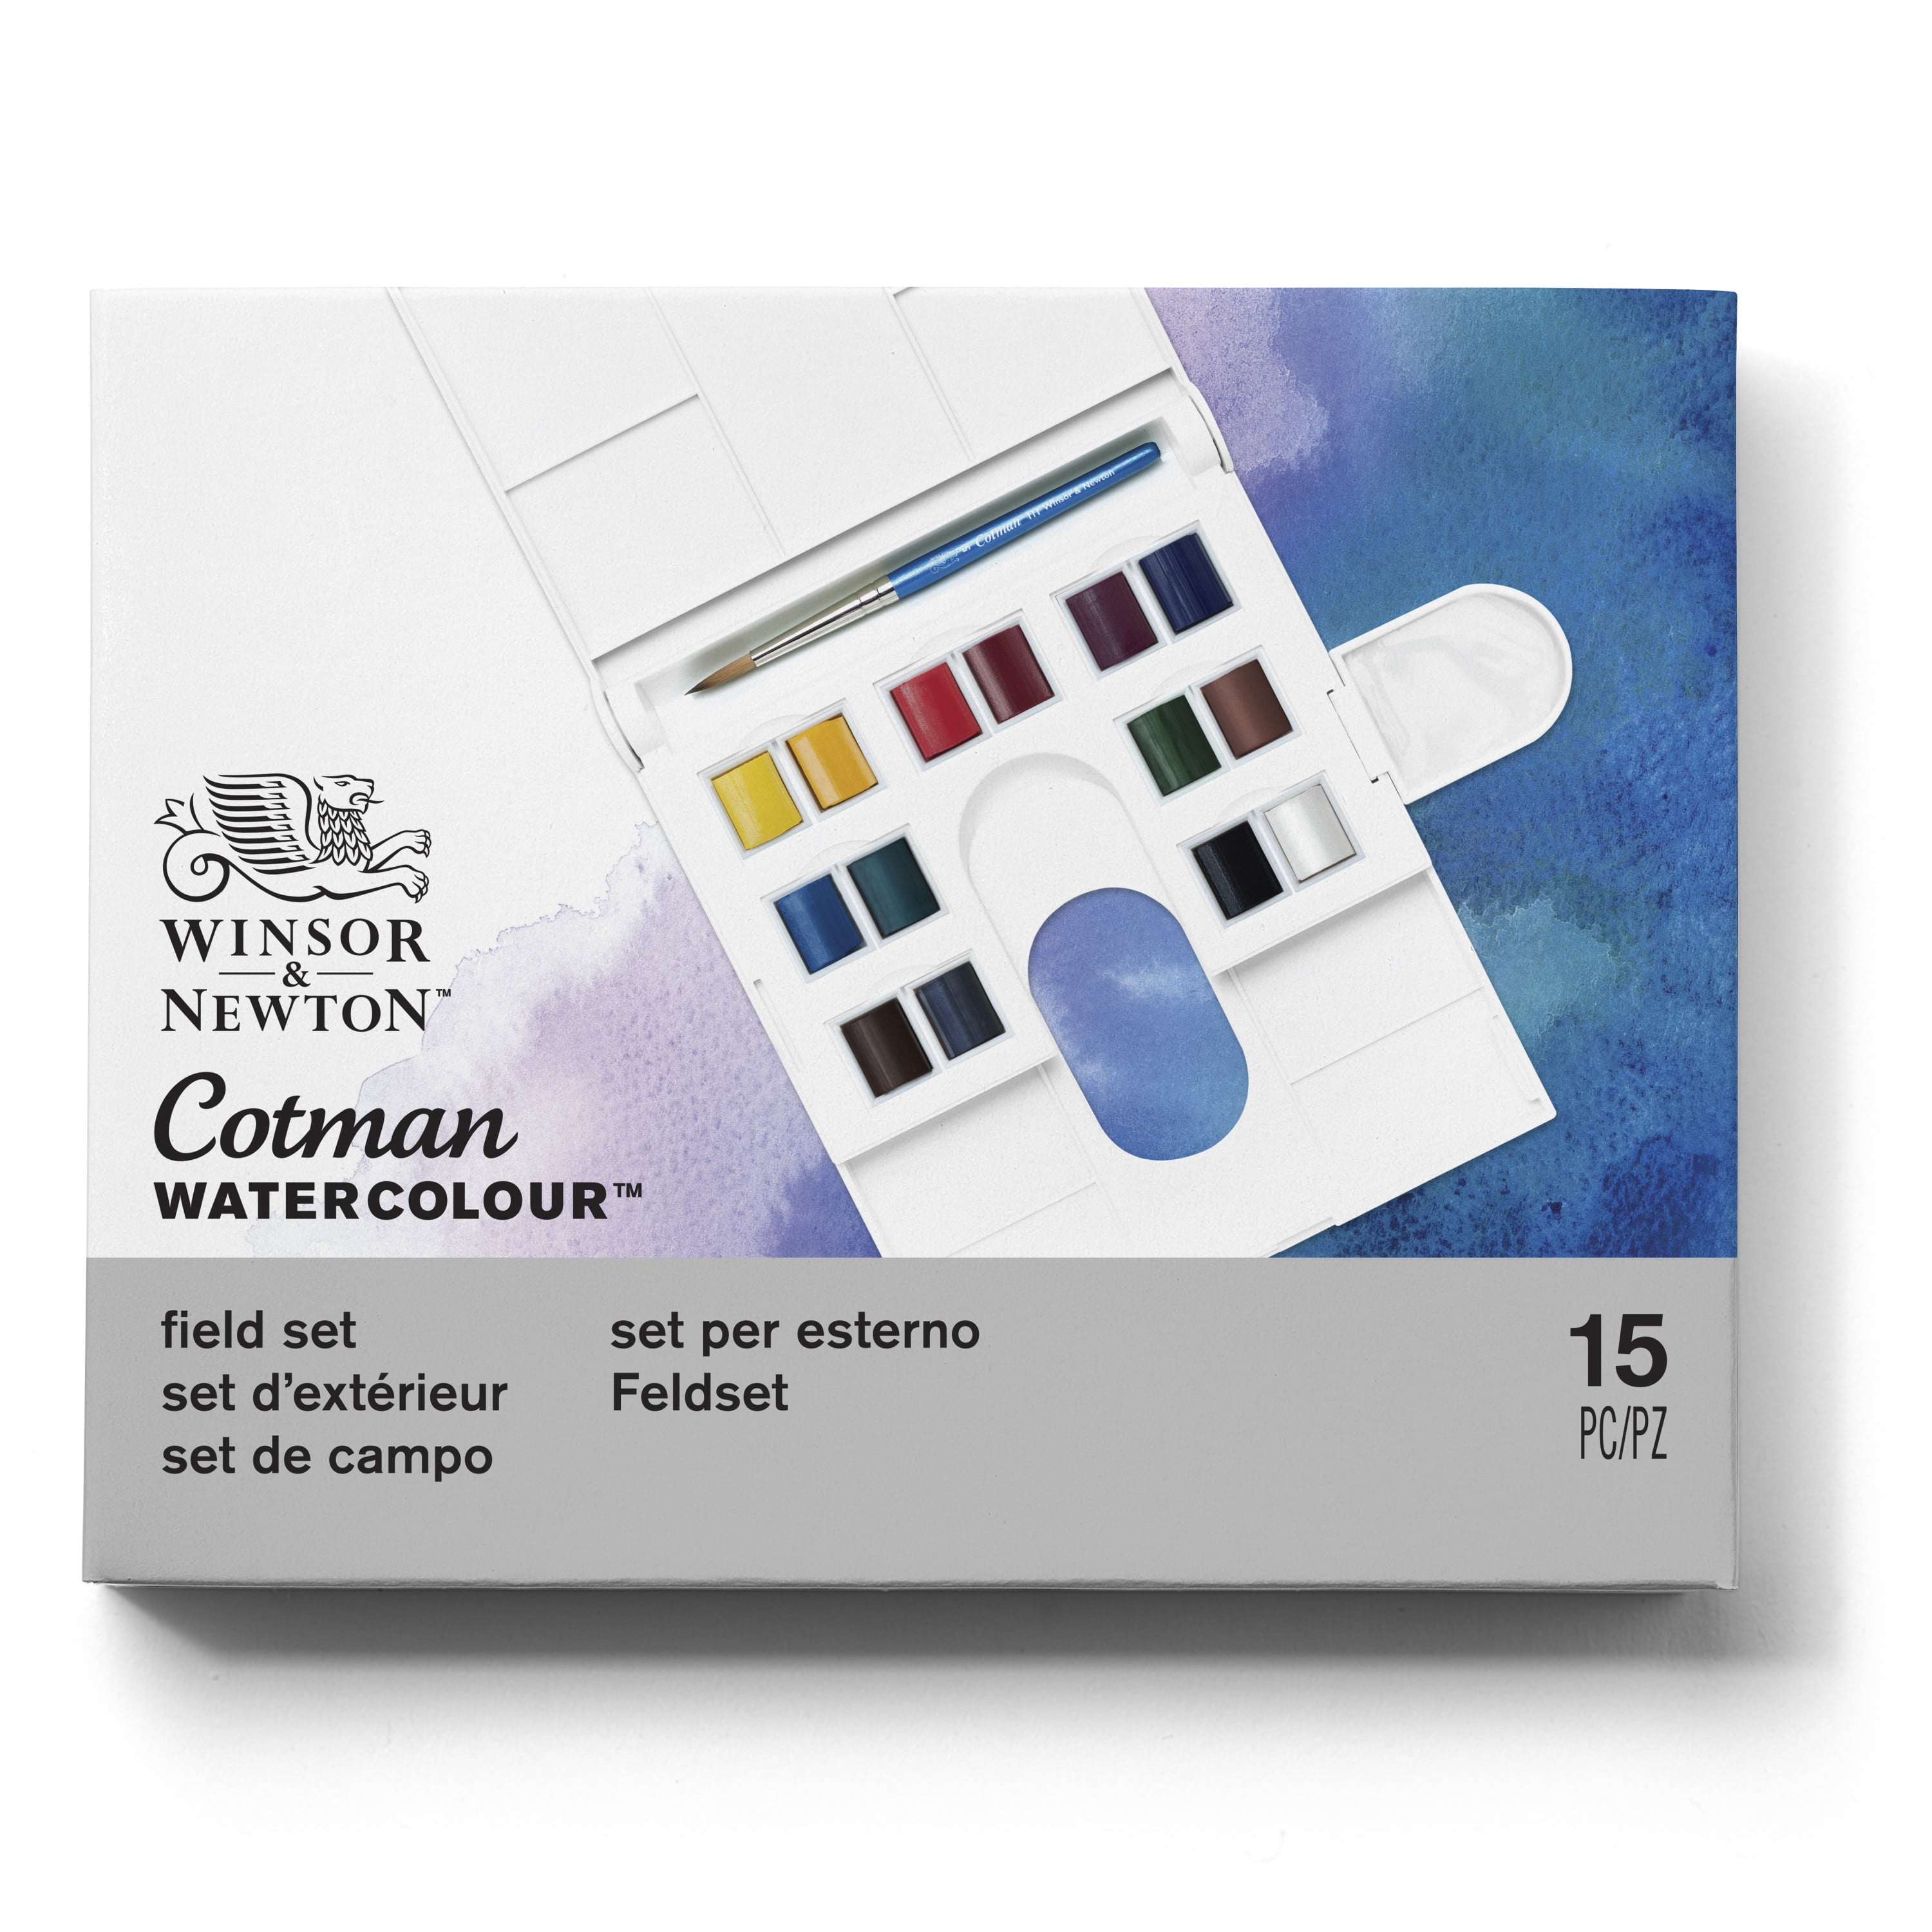 Winsor & Newton Professional Watercolor Compact Set 14 Half Pans